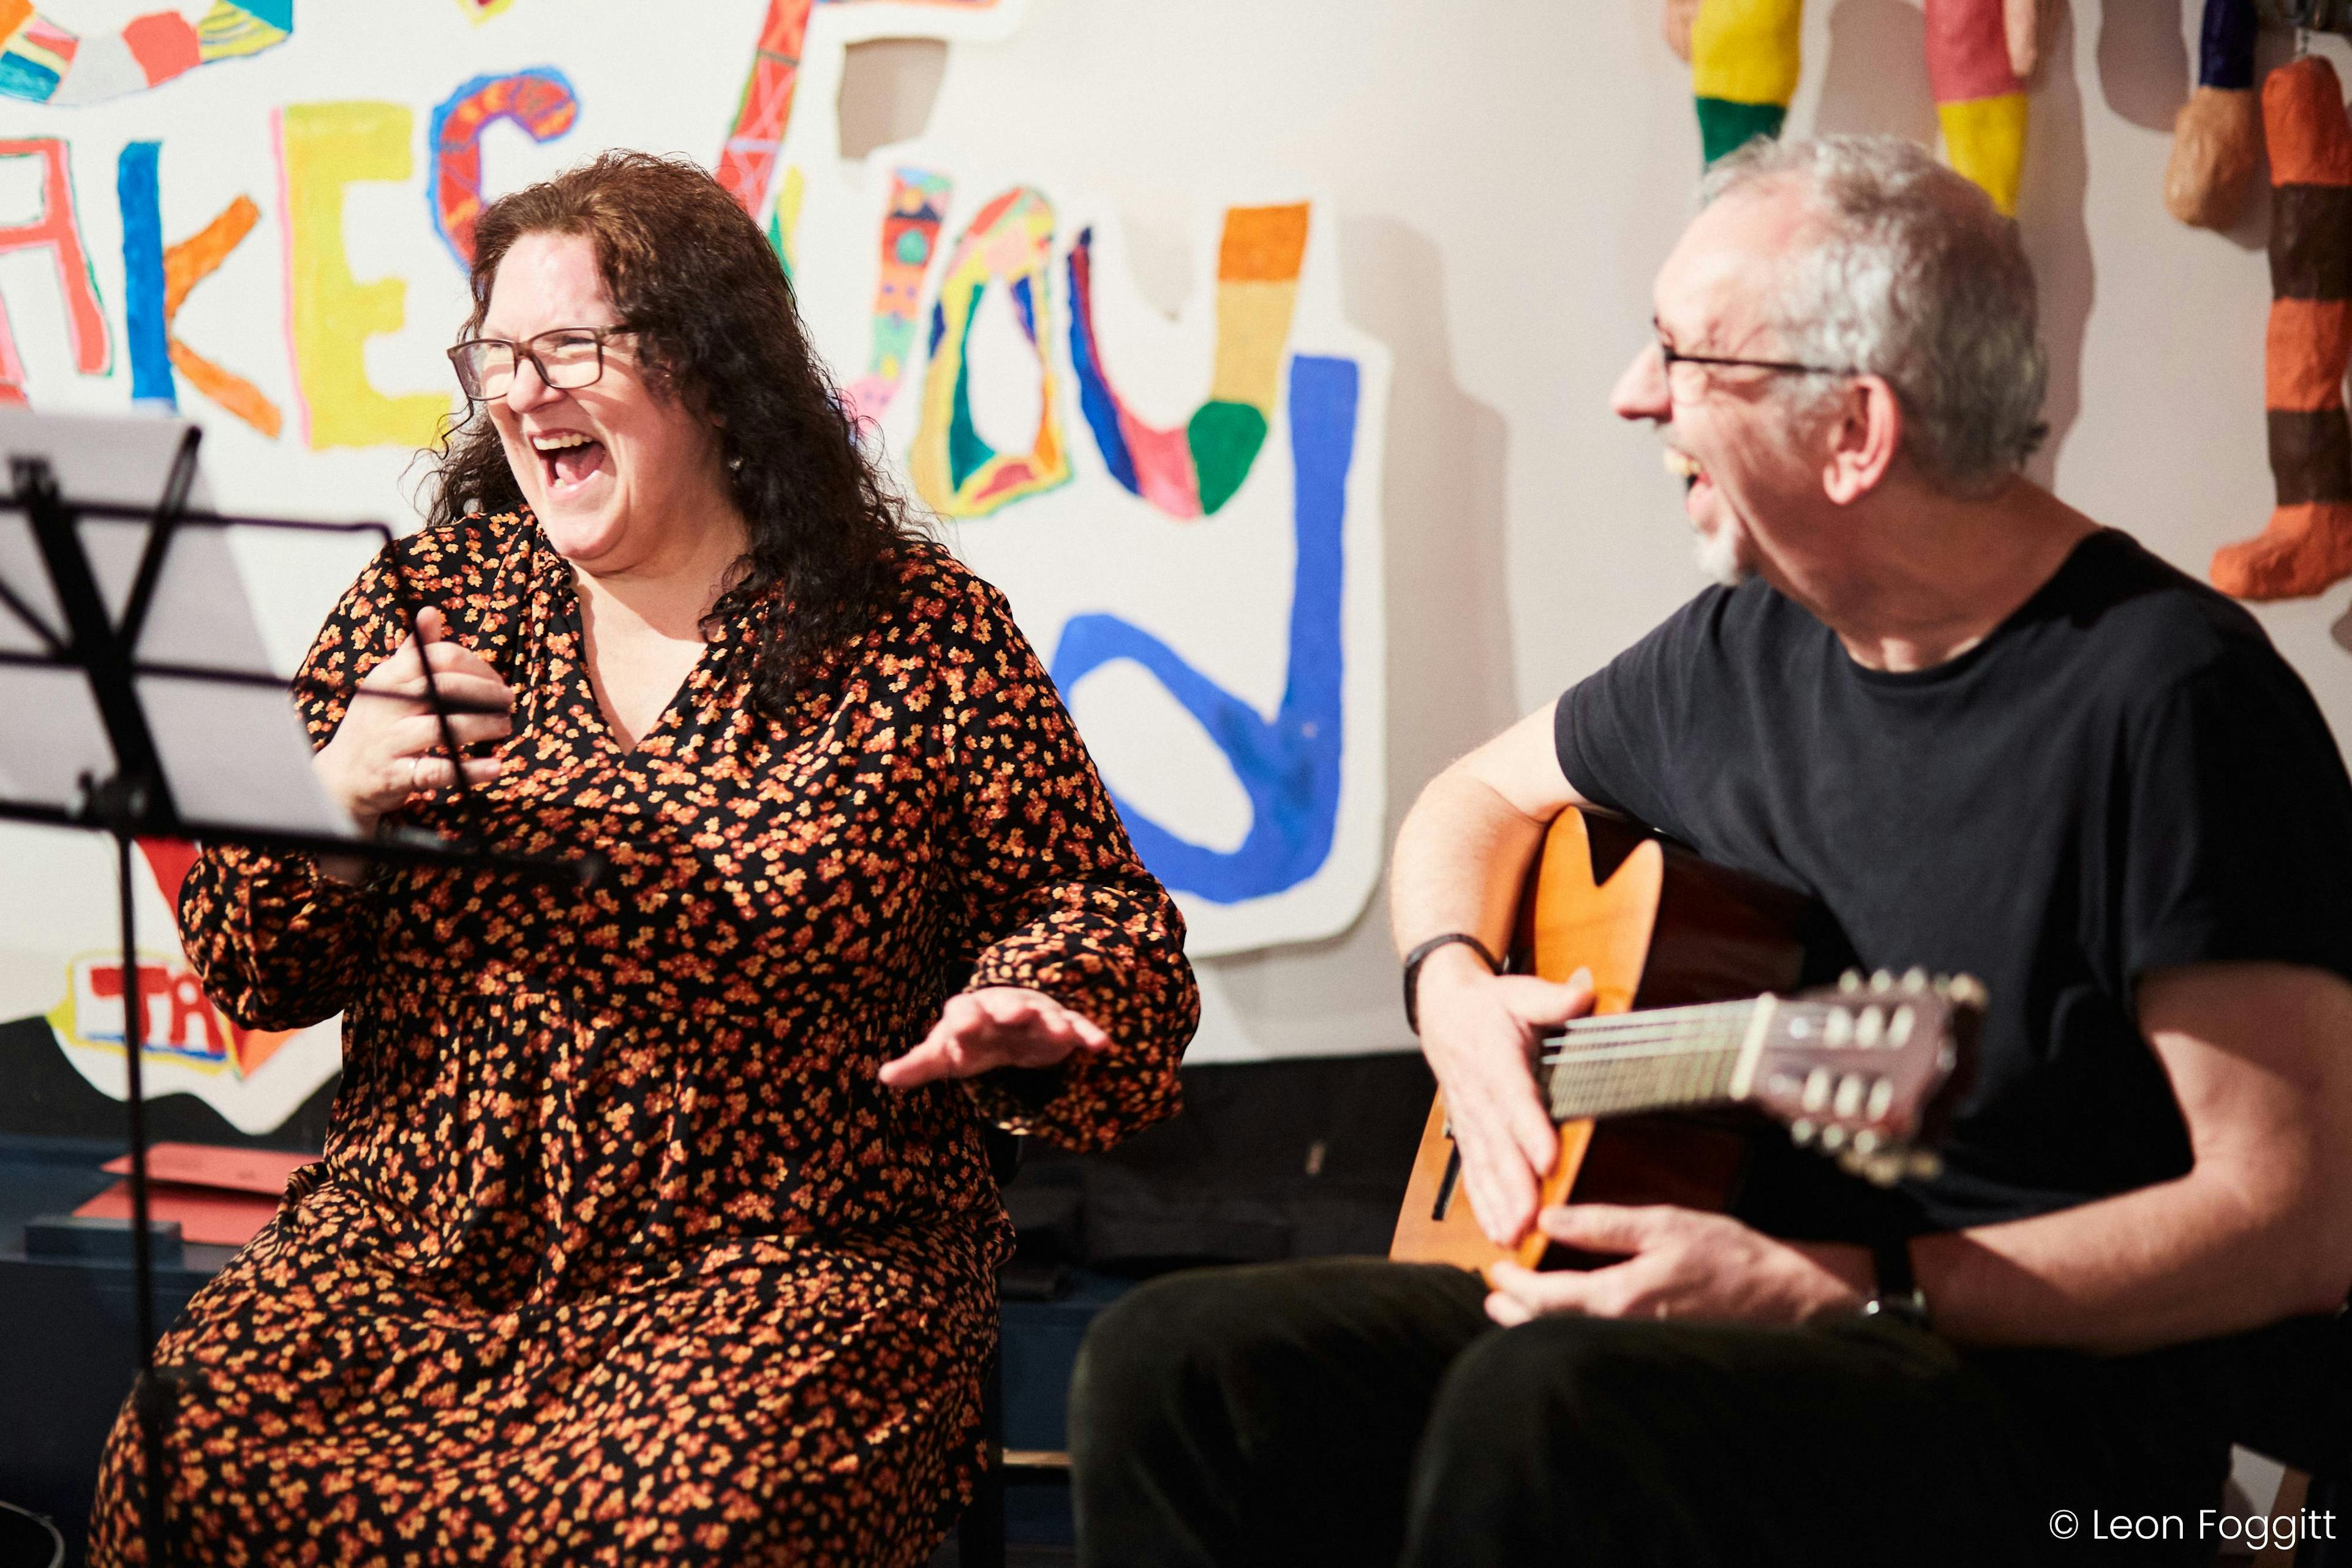 James Compton playing guitar next to a smiling woman